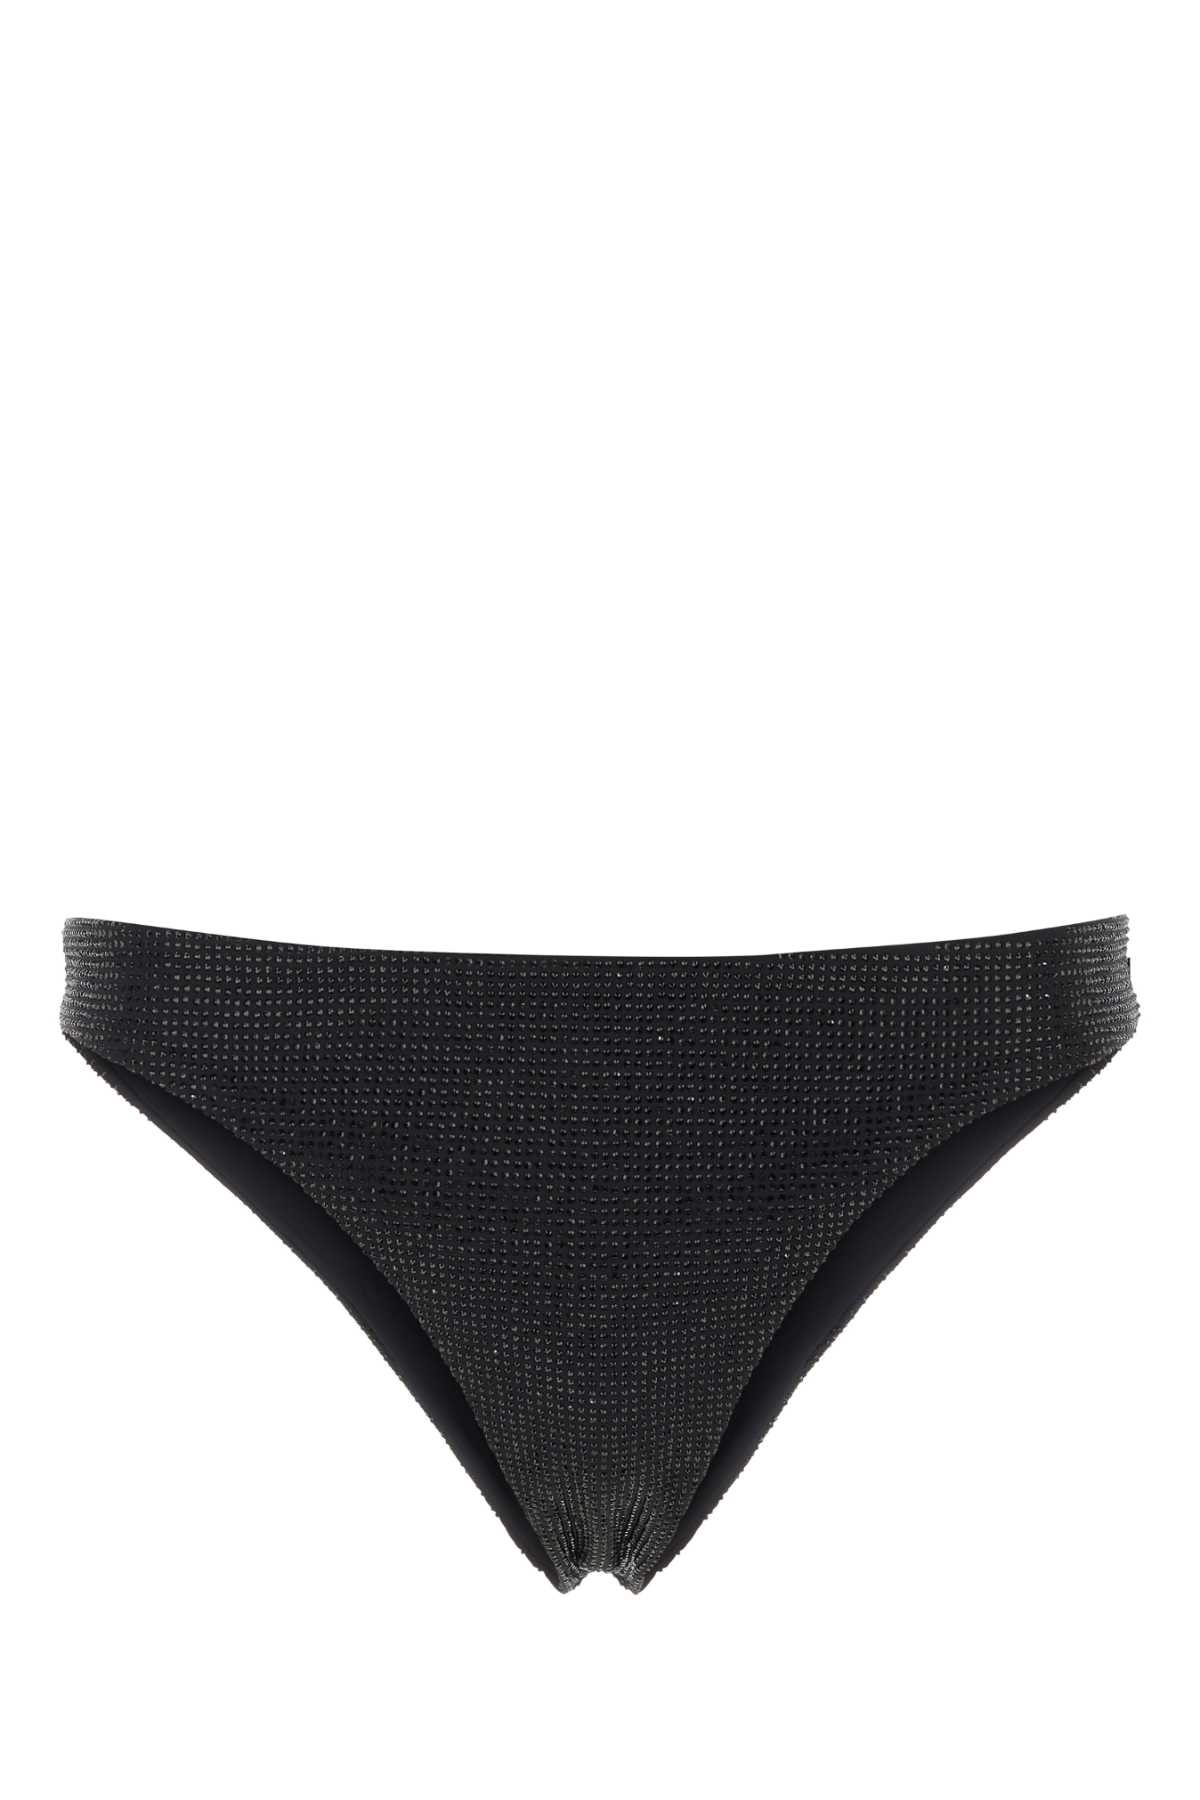 Prada Black Stretch Re-nylon Bikini Bottom